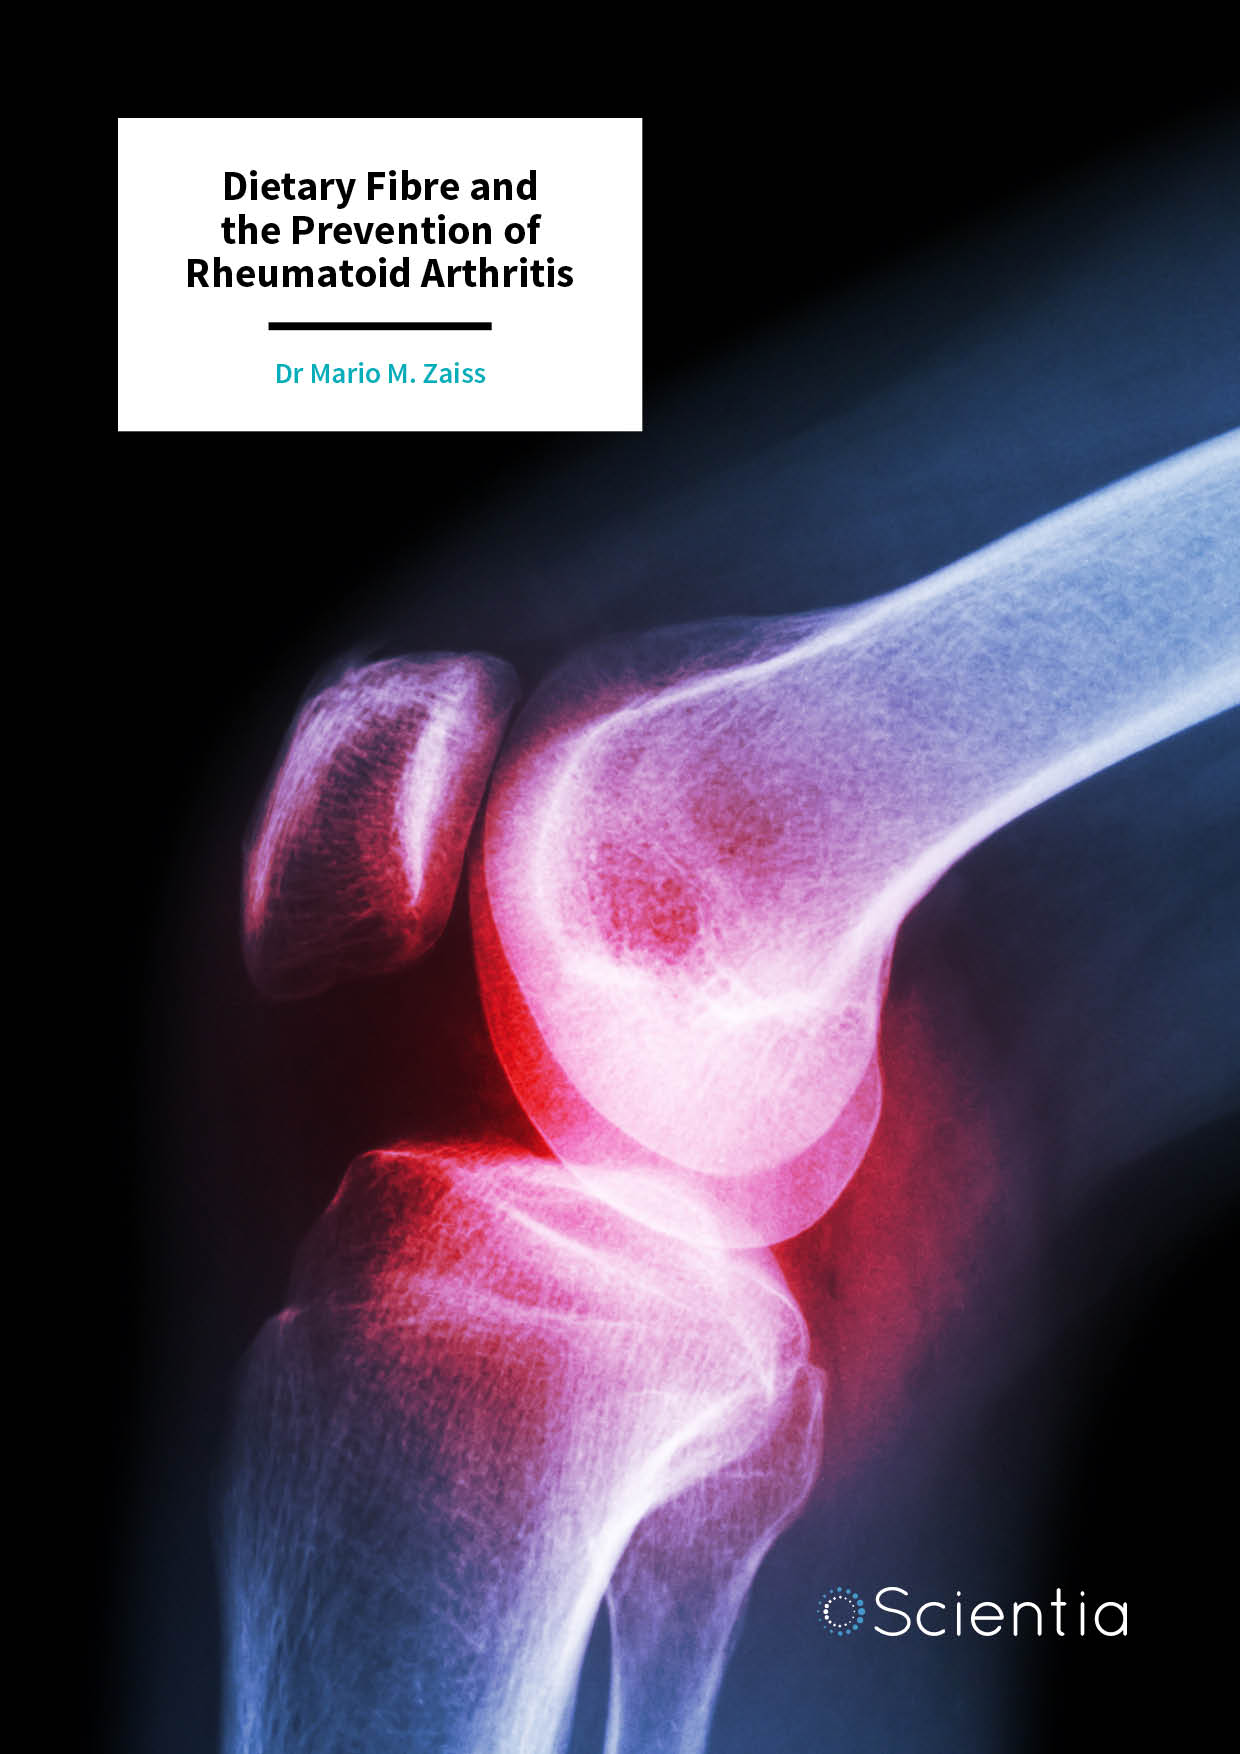 Dr Mario Zaiss – Dietary Fibre and the Prevention of Rheumatoid Arthritis